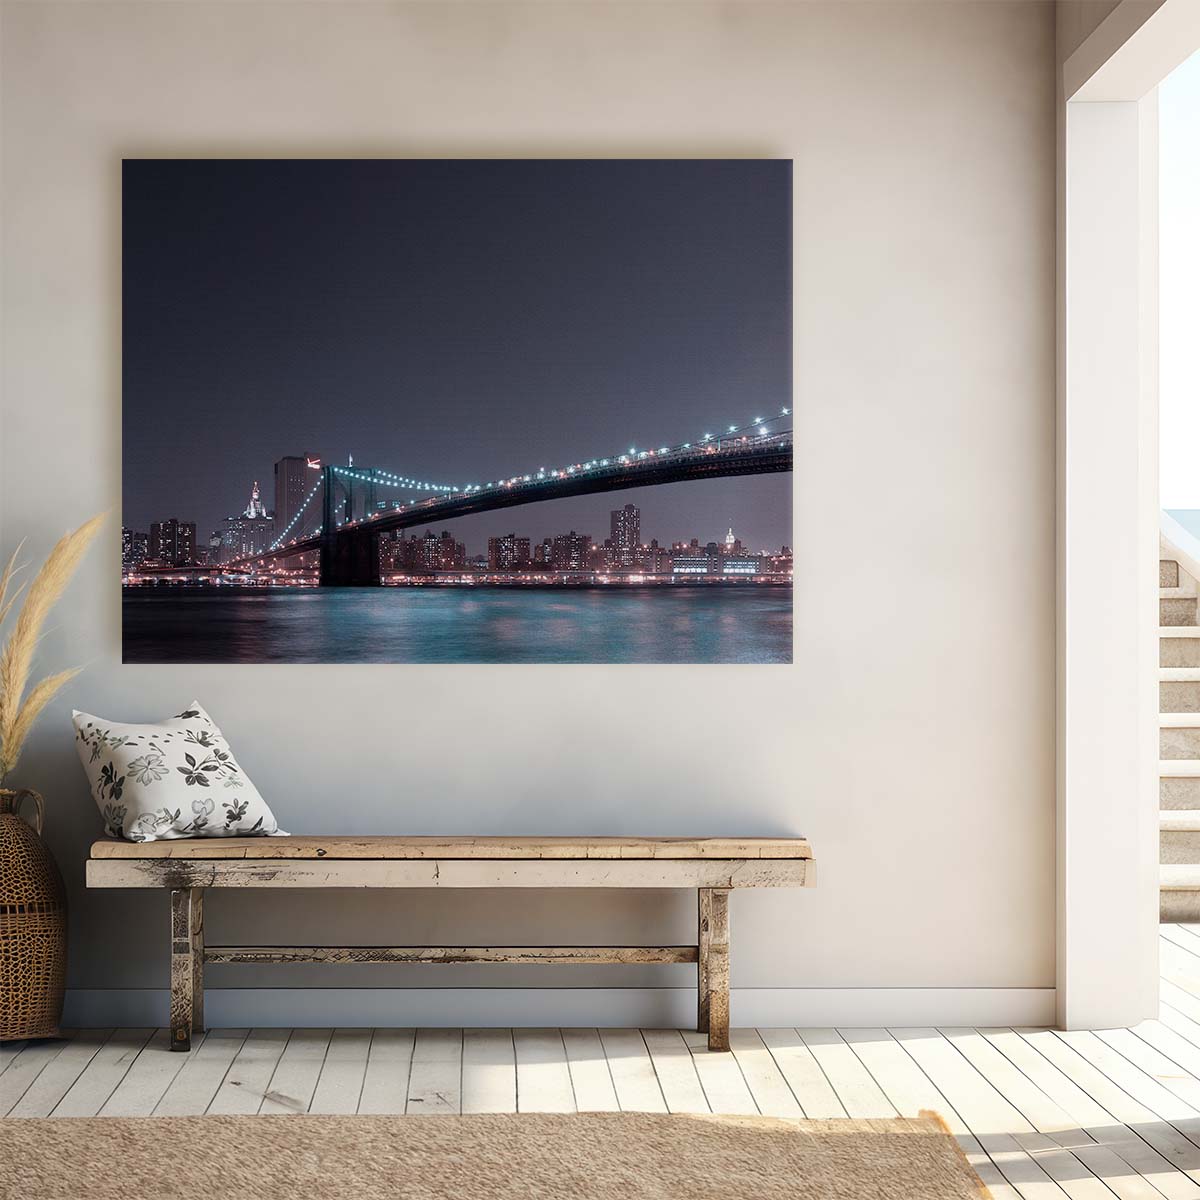 Iconic Brooklyn Bridge NYC Skyline Panorama Wall Art by Luxuriance Designs. Made in USA.